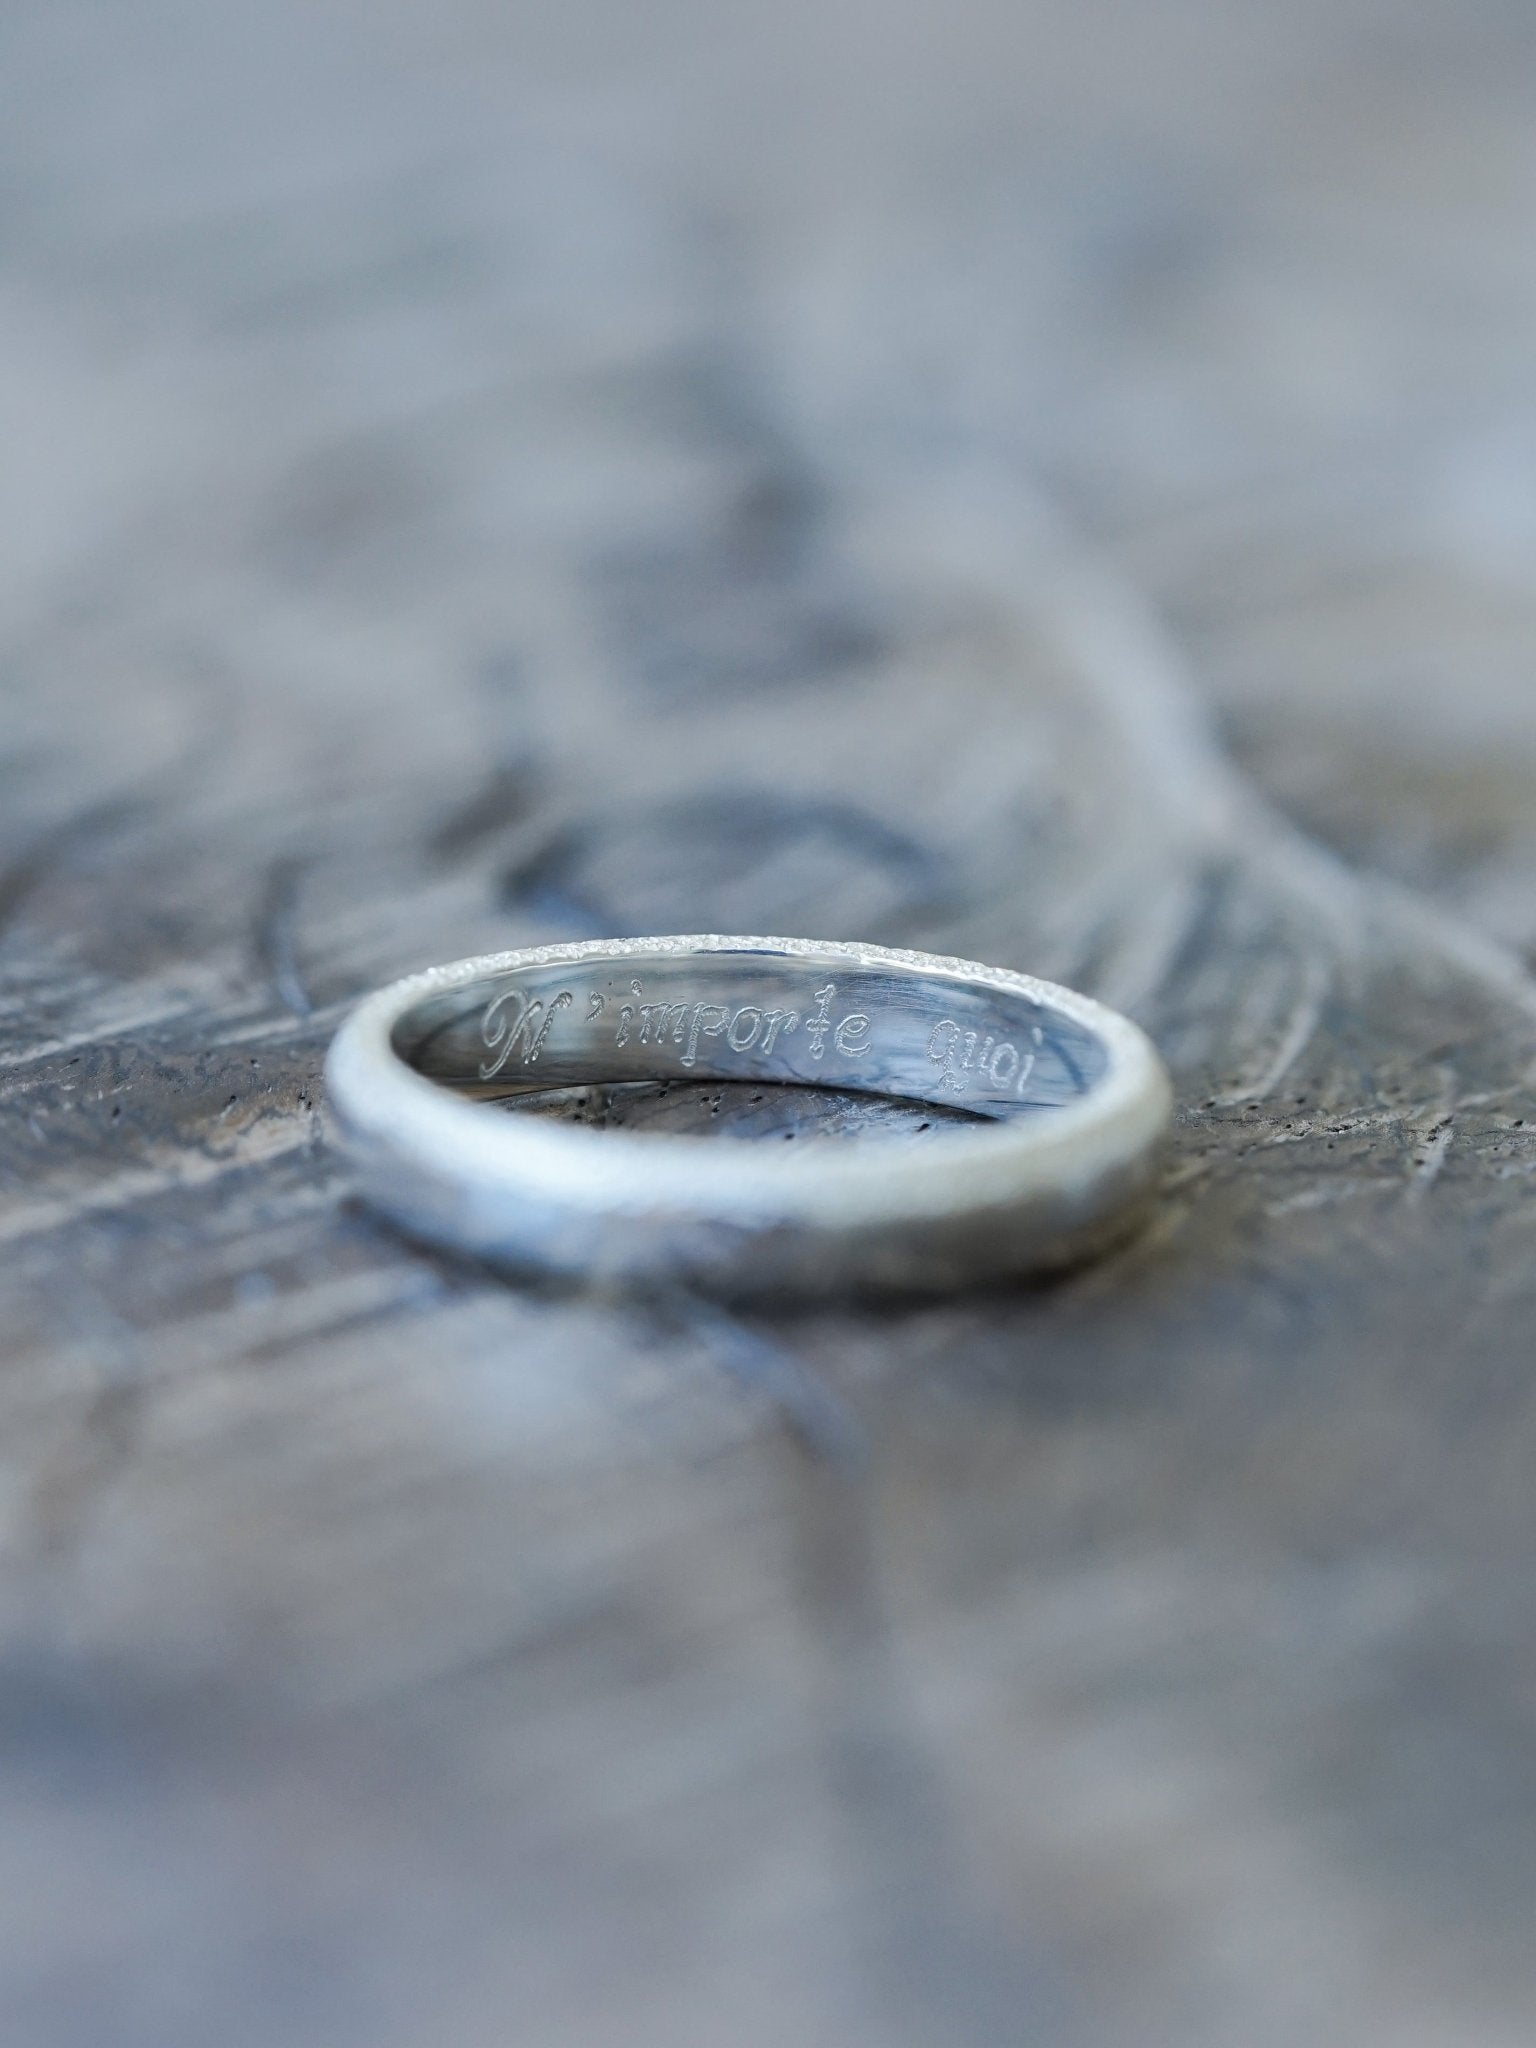 8mm Tungsten Wedding Ring,Custom Engraved Wedding Band Free Engraving | eBay